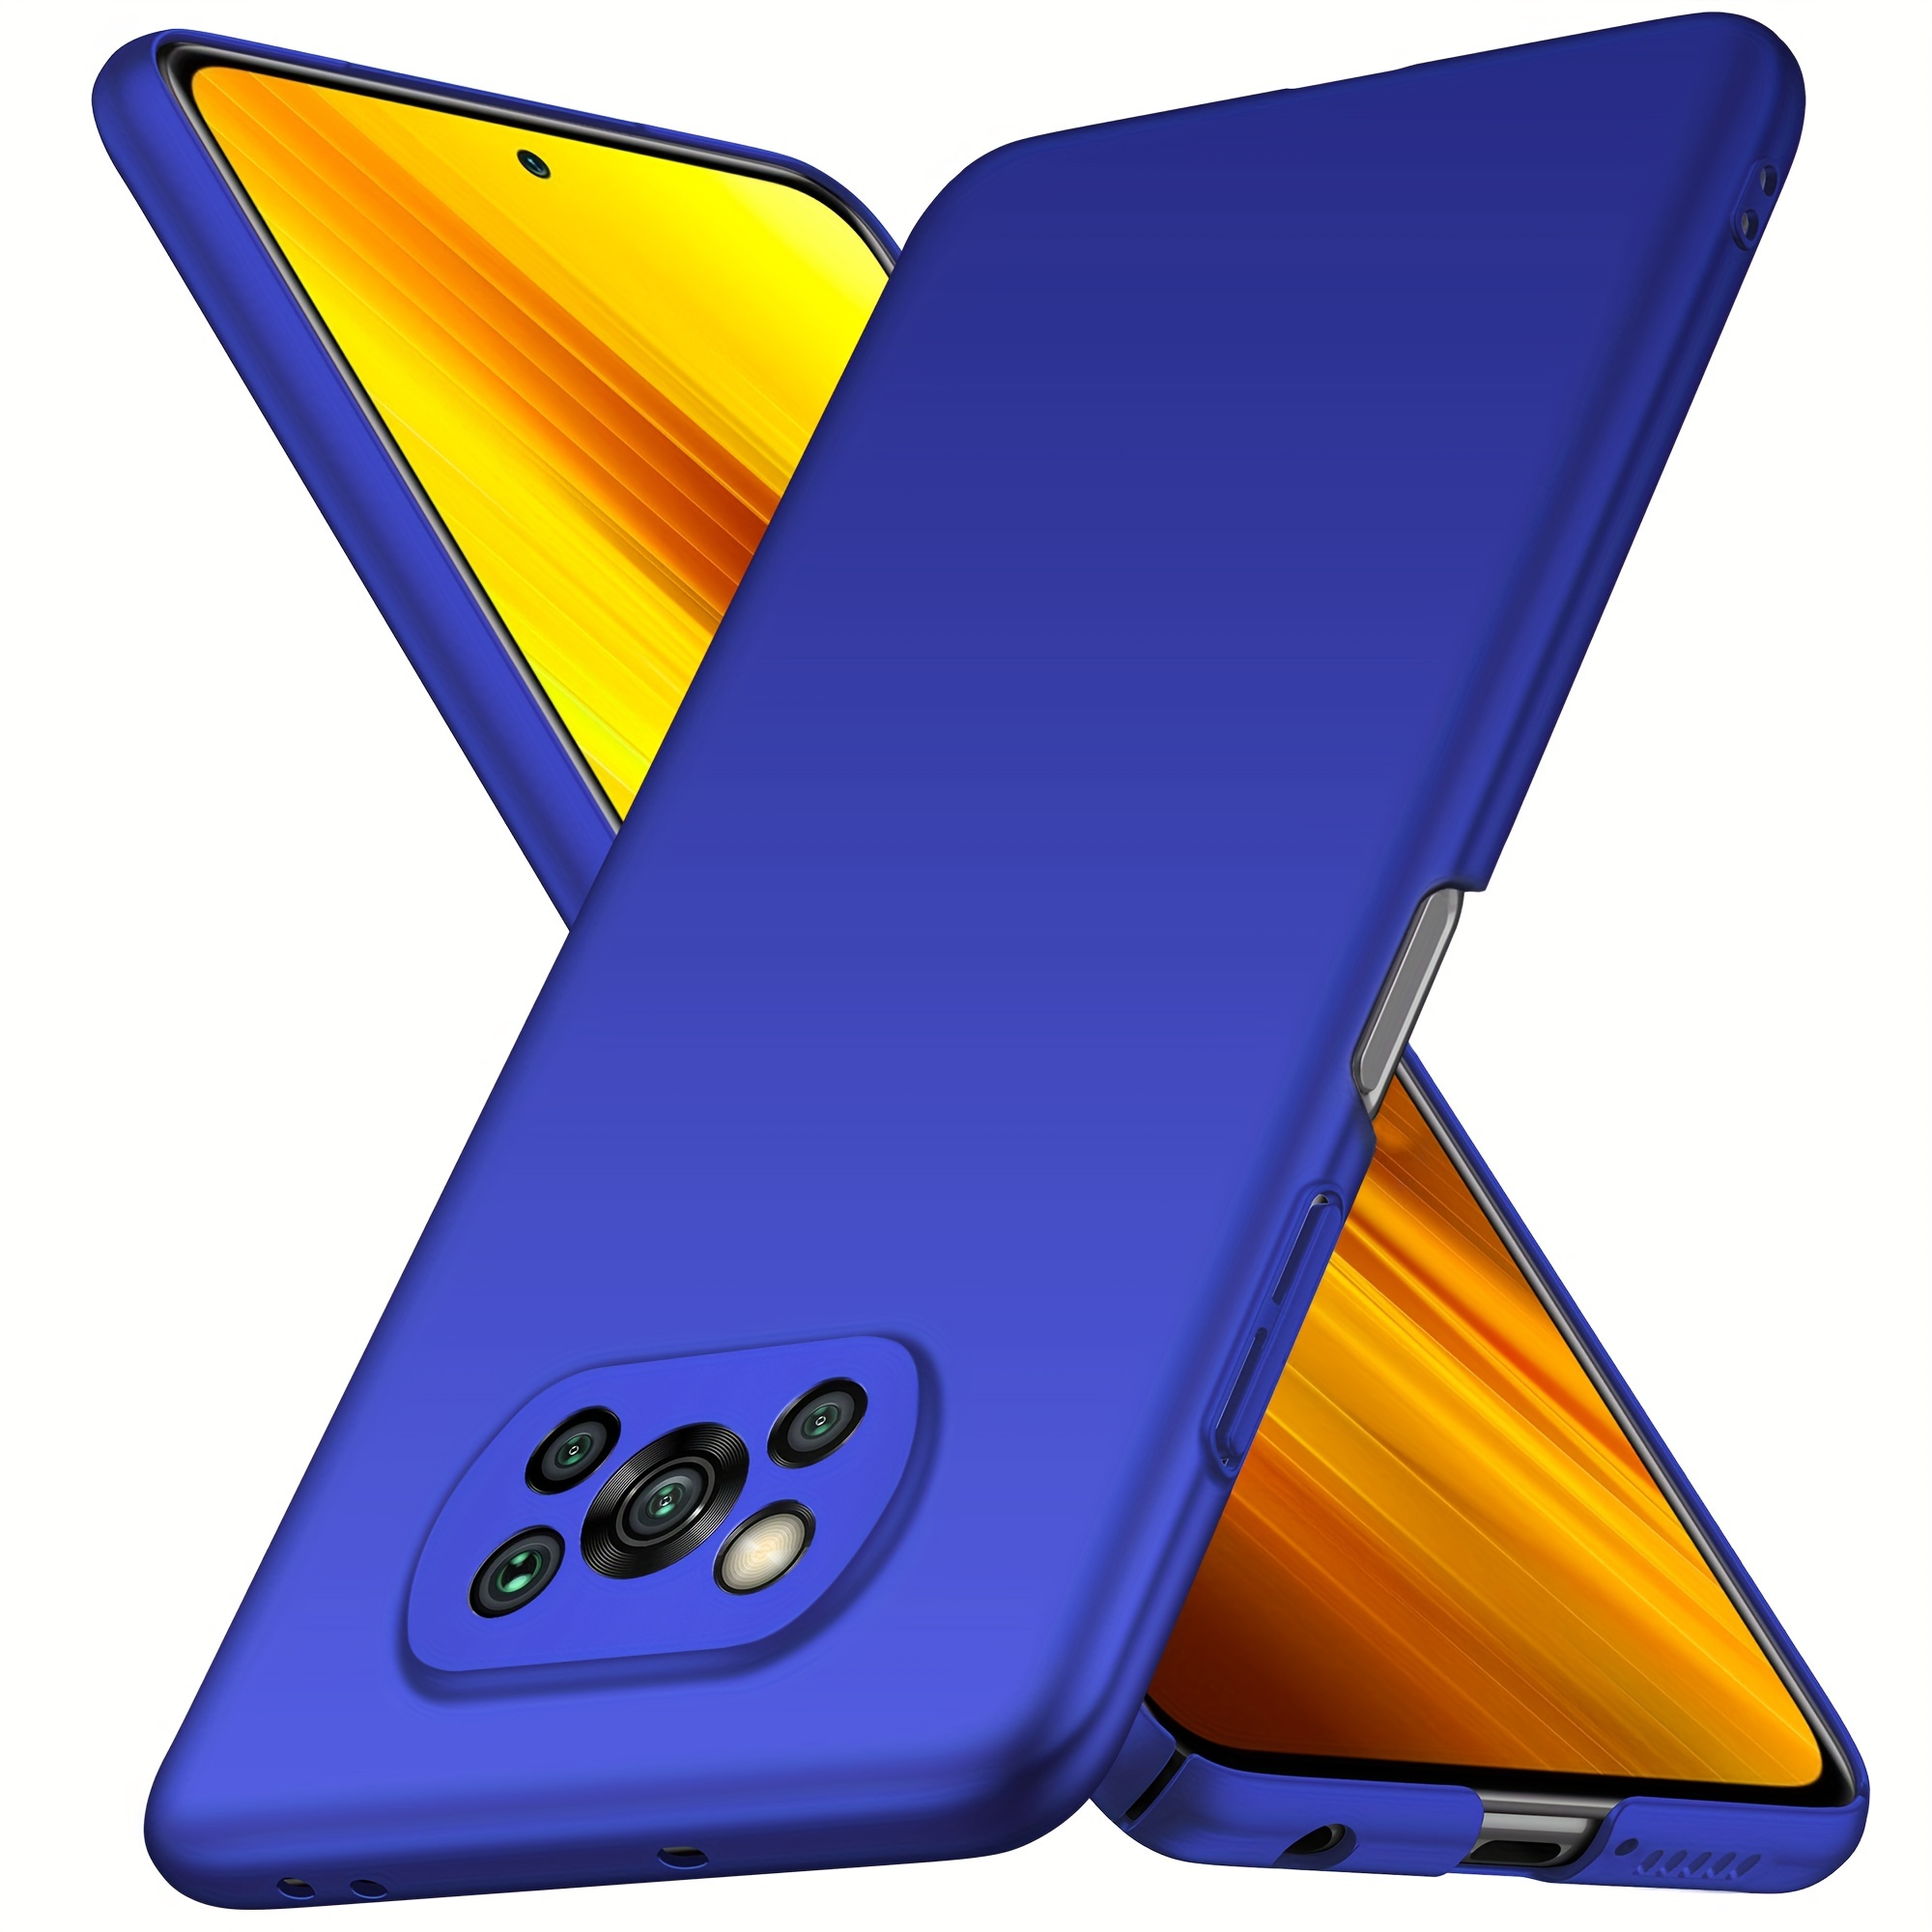 Xiaomi POCO X3 NFC - Full Specifications